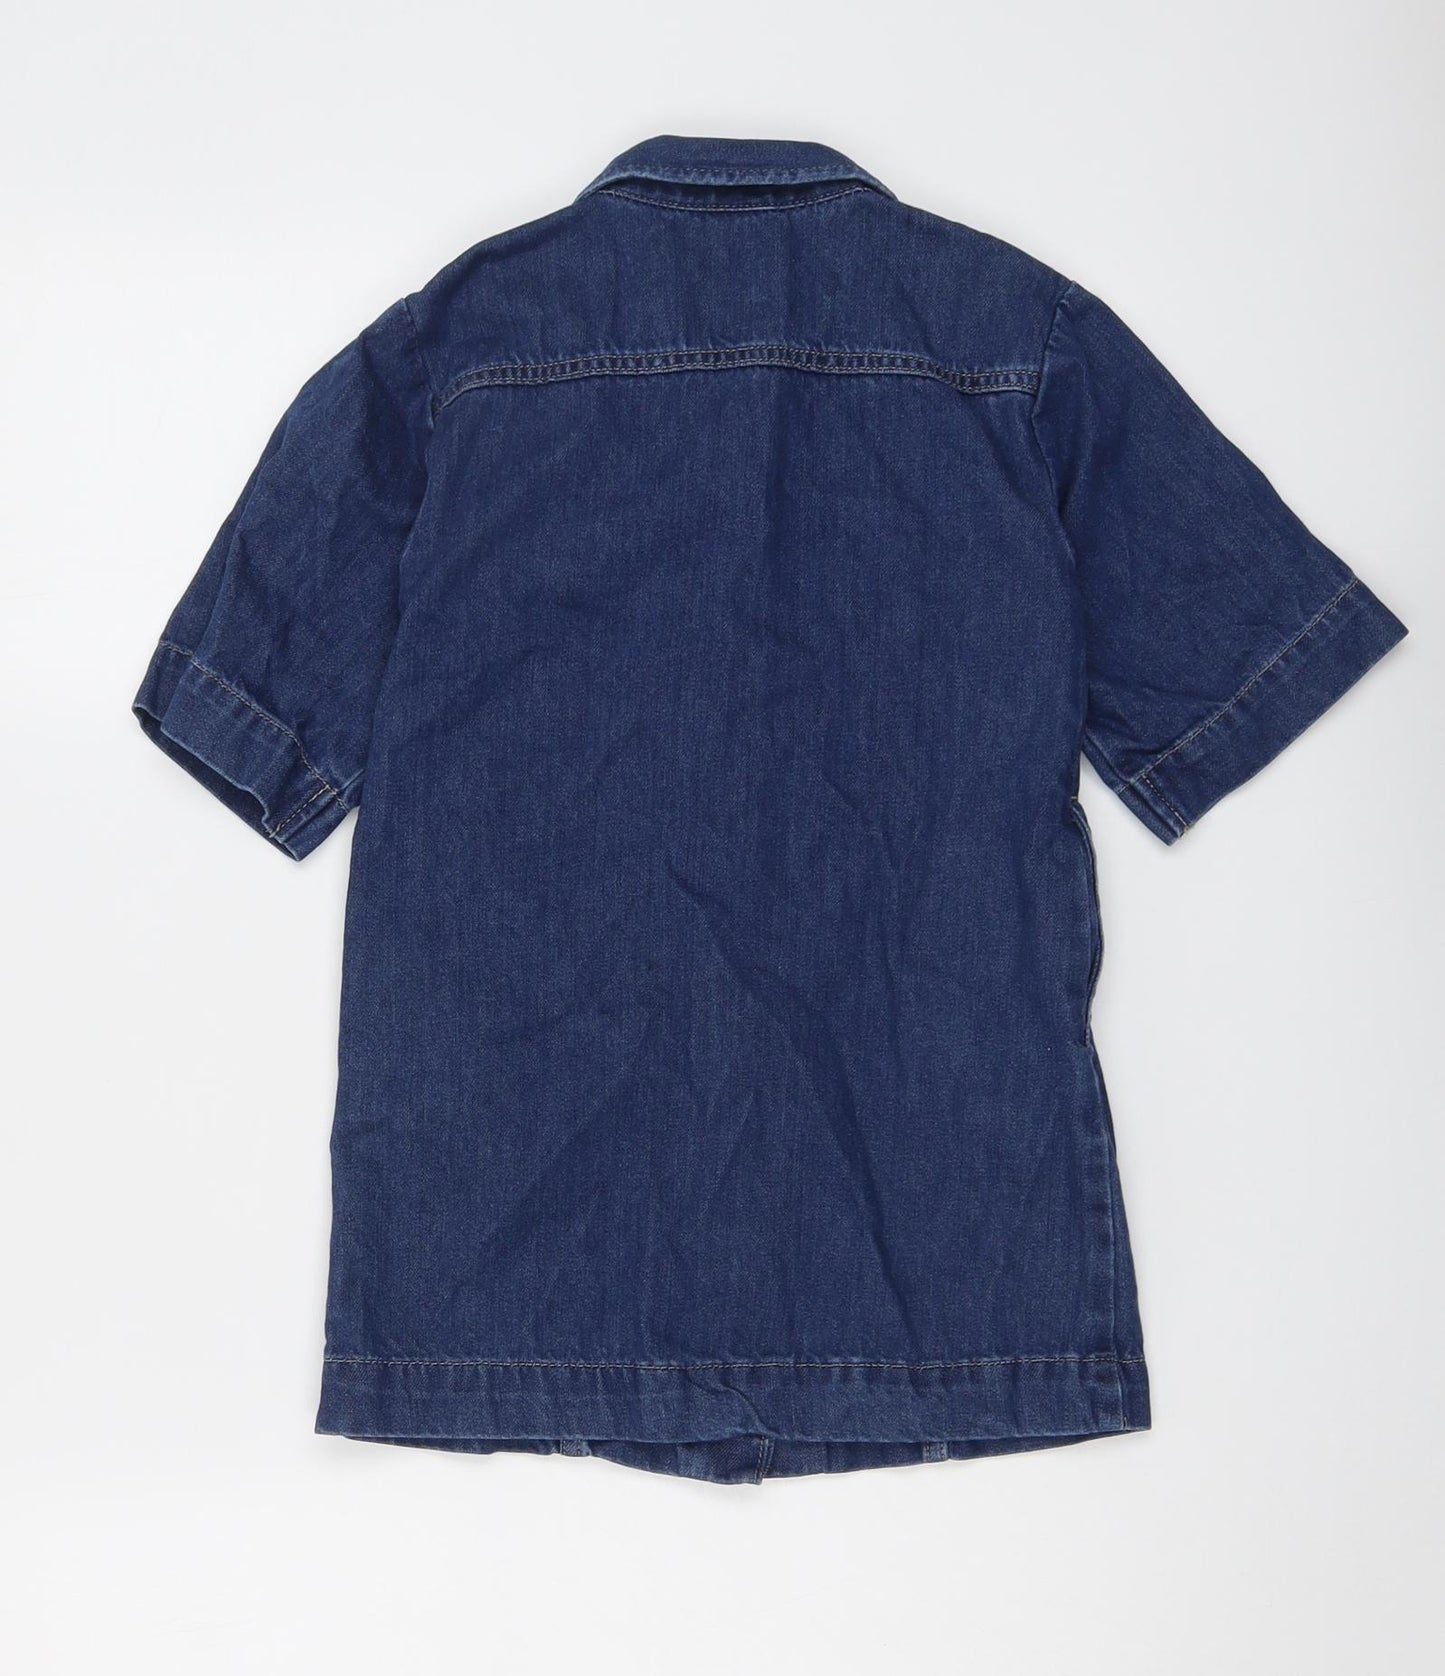 NEXT Girls Blue Cotton Shirt Dress Size 5 Years Collared Button